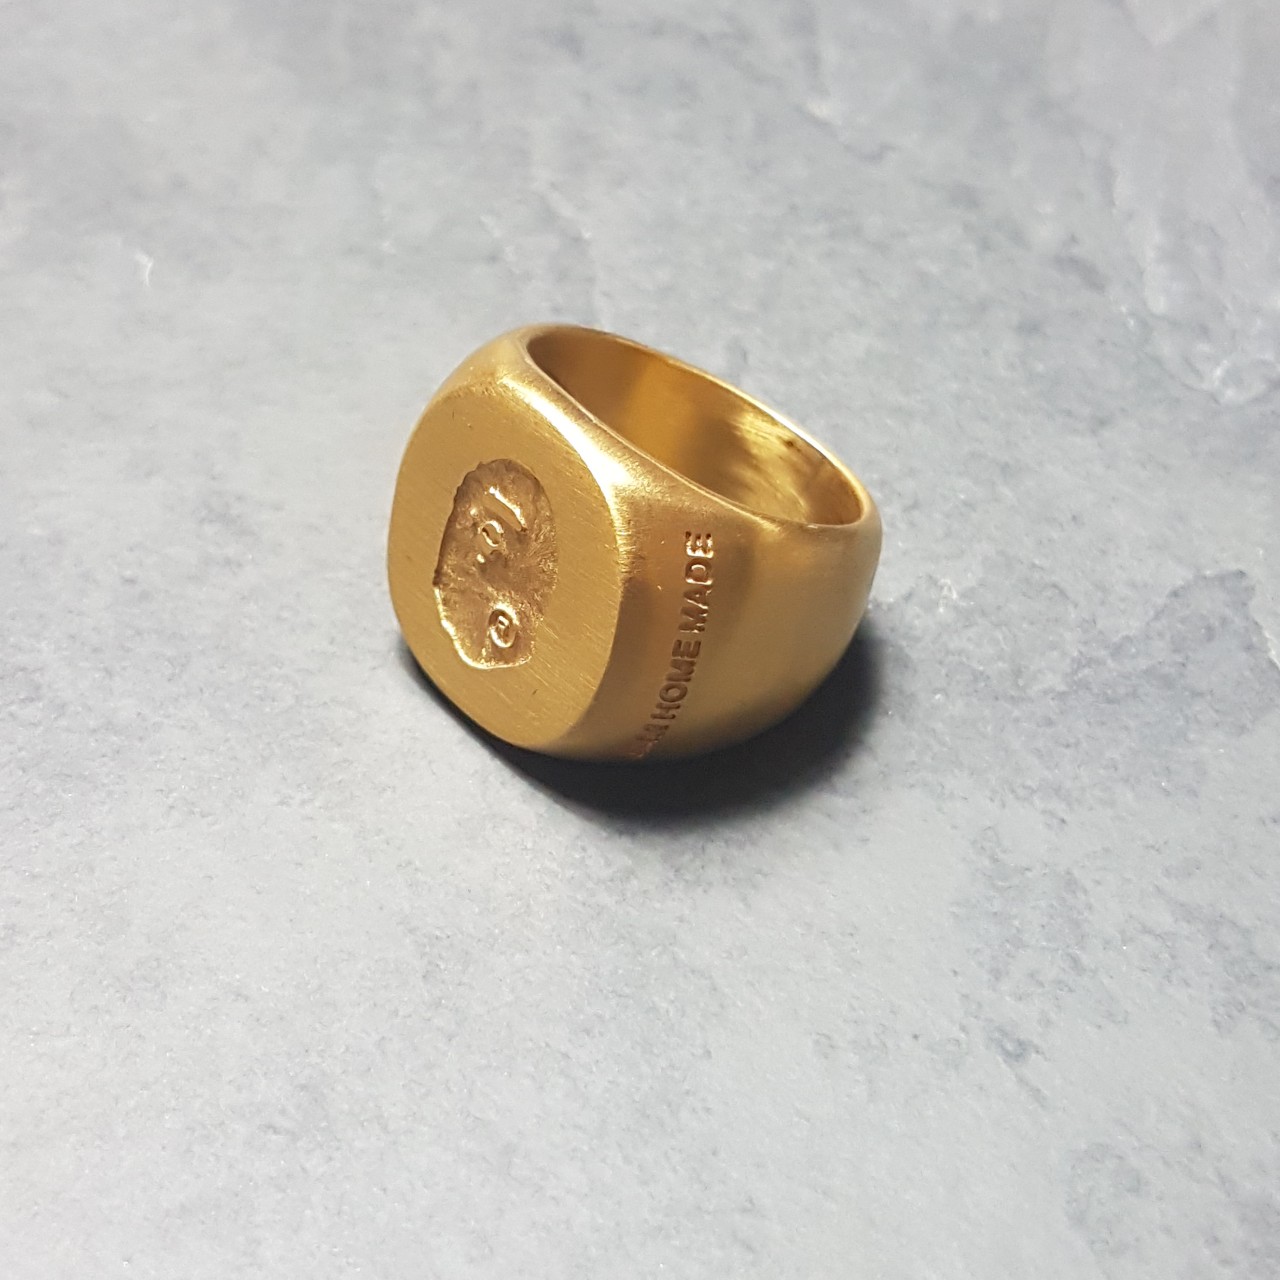 Aape Bape Ring, Nhẫn Bape màu Gold